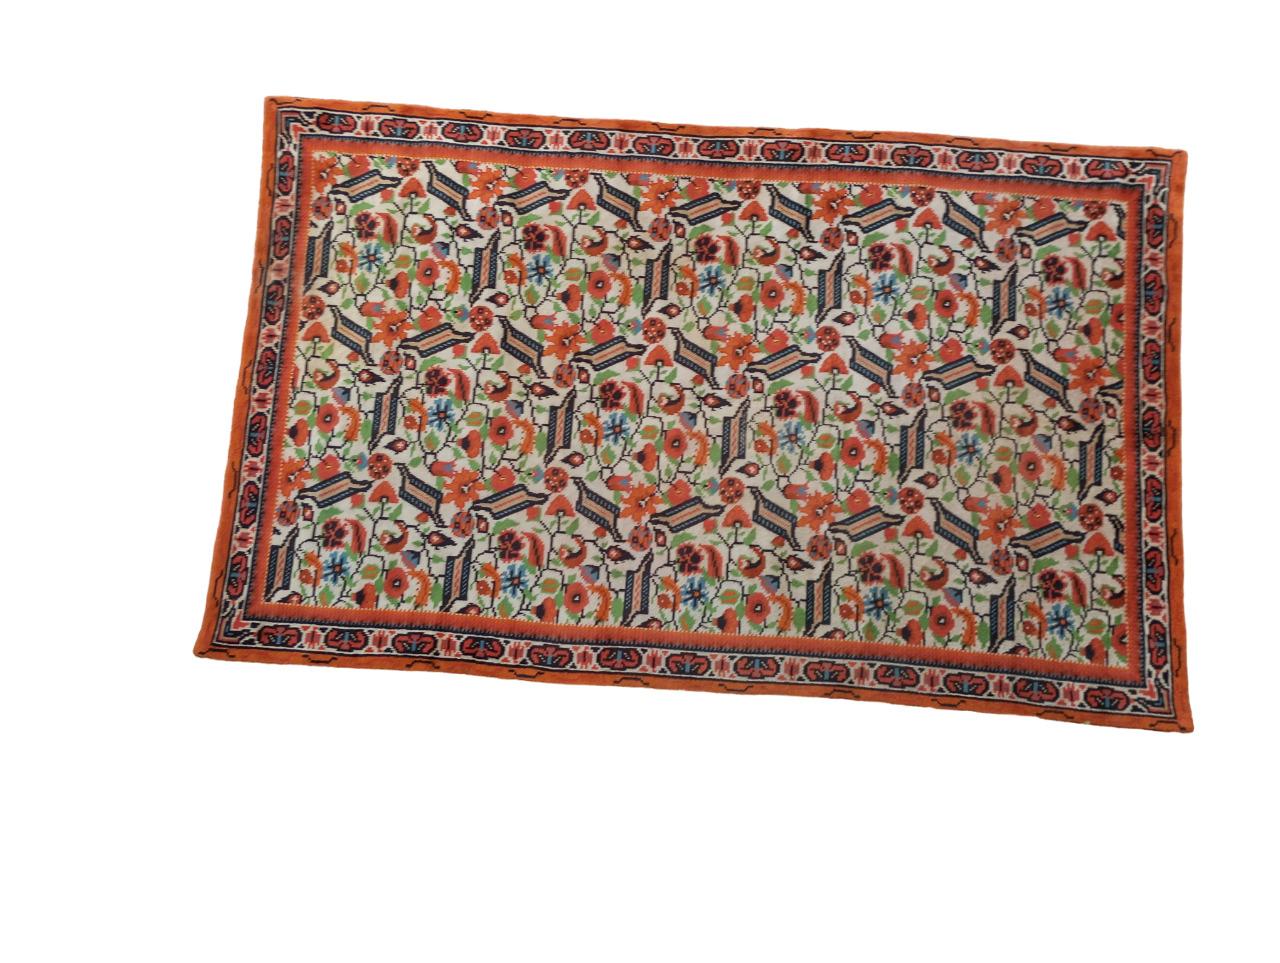 European Anatolian-style carpet with Ushak design featuring birds (Austria) For Sale 2